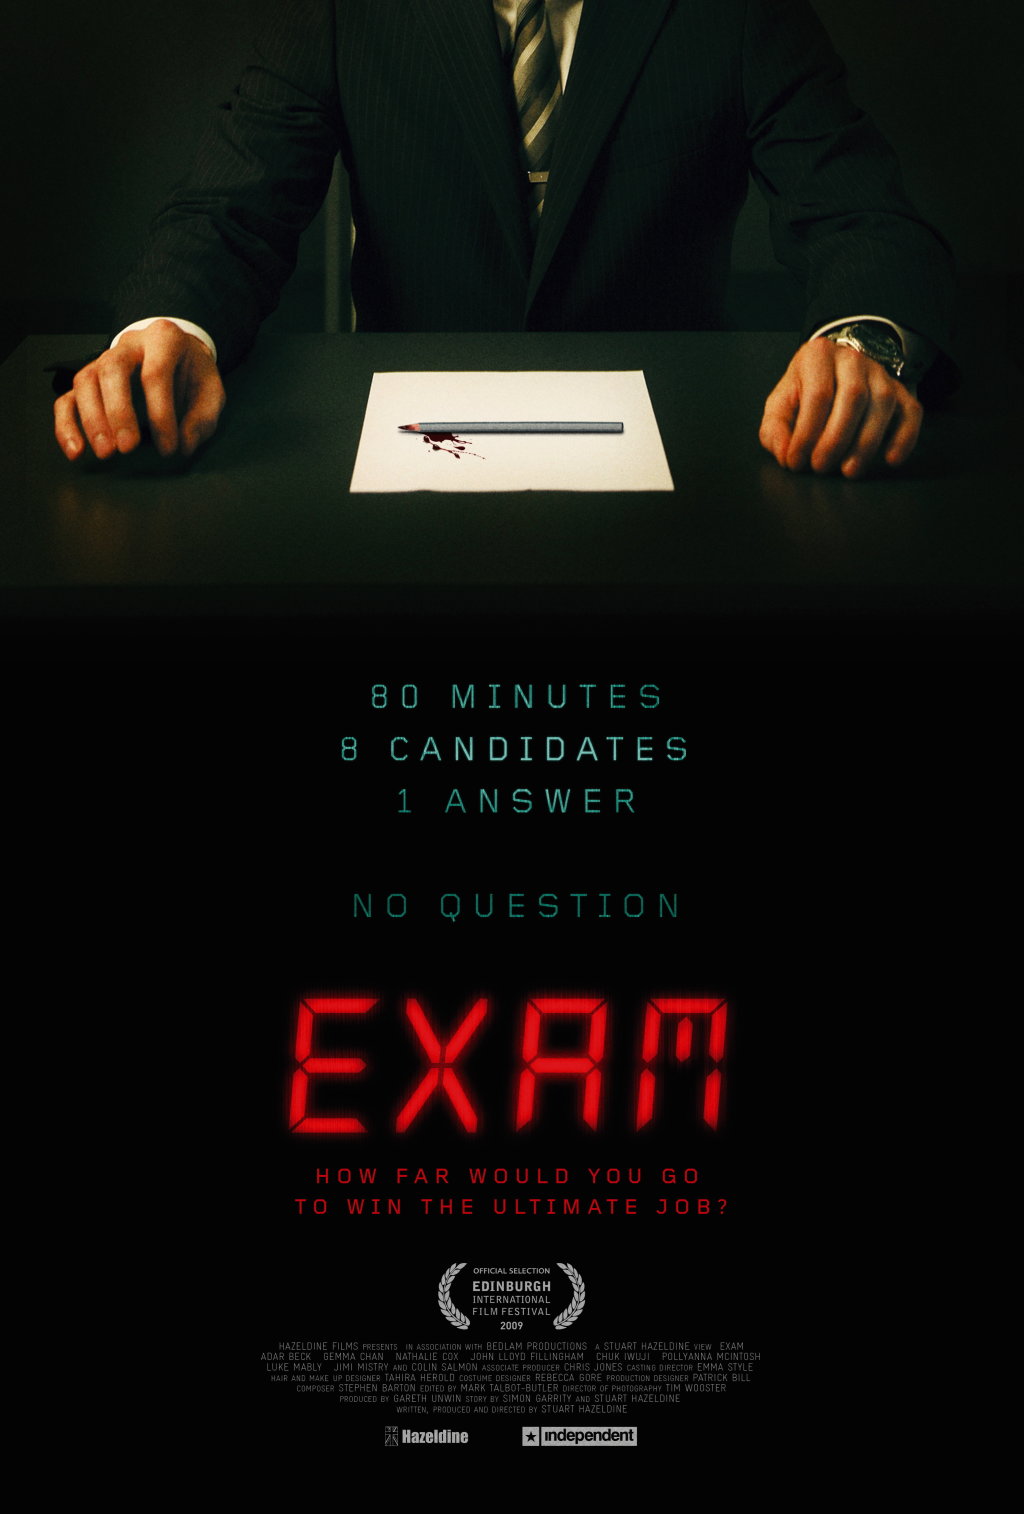 Watch Exam on Netflix Today!